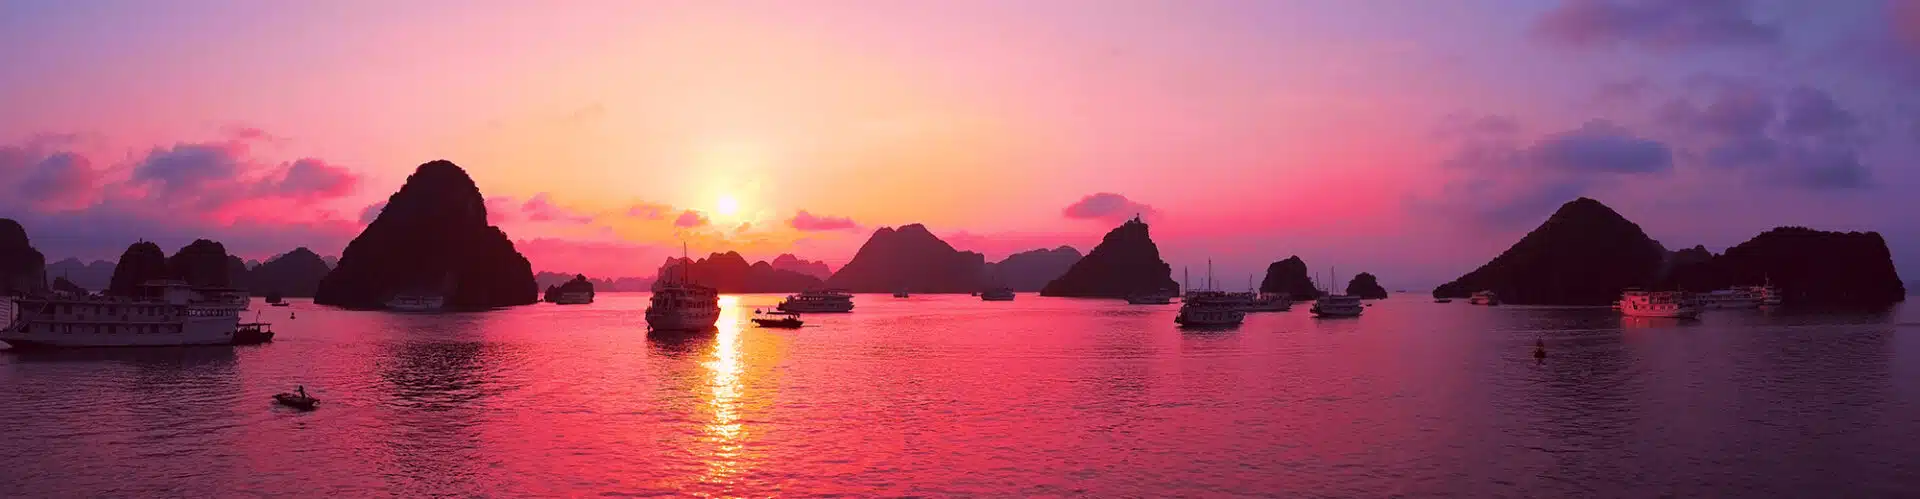 Vietnam Sunset